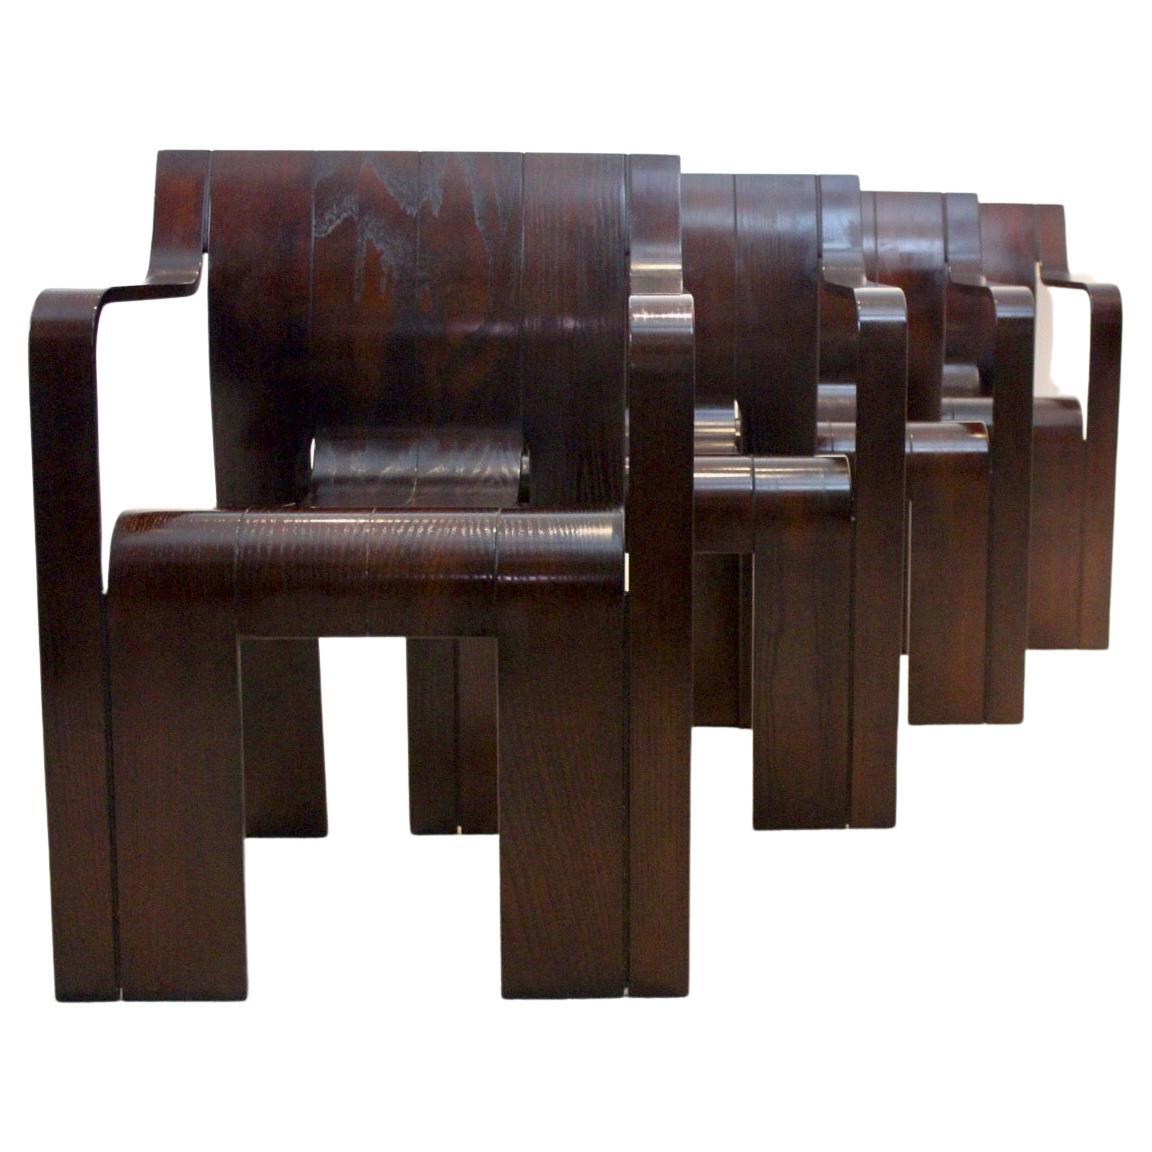 ‘Strip’ Chairs with Armrests in Dark-Brown Ashwood by Gijs Bakker for Castelijn For Sale